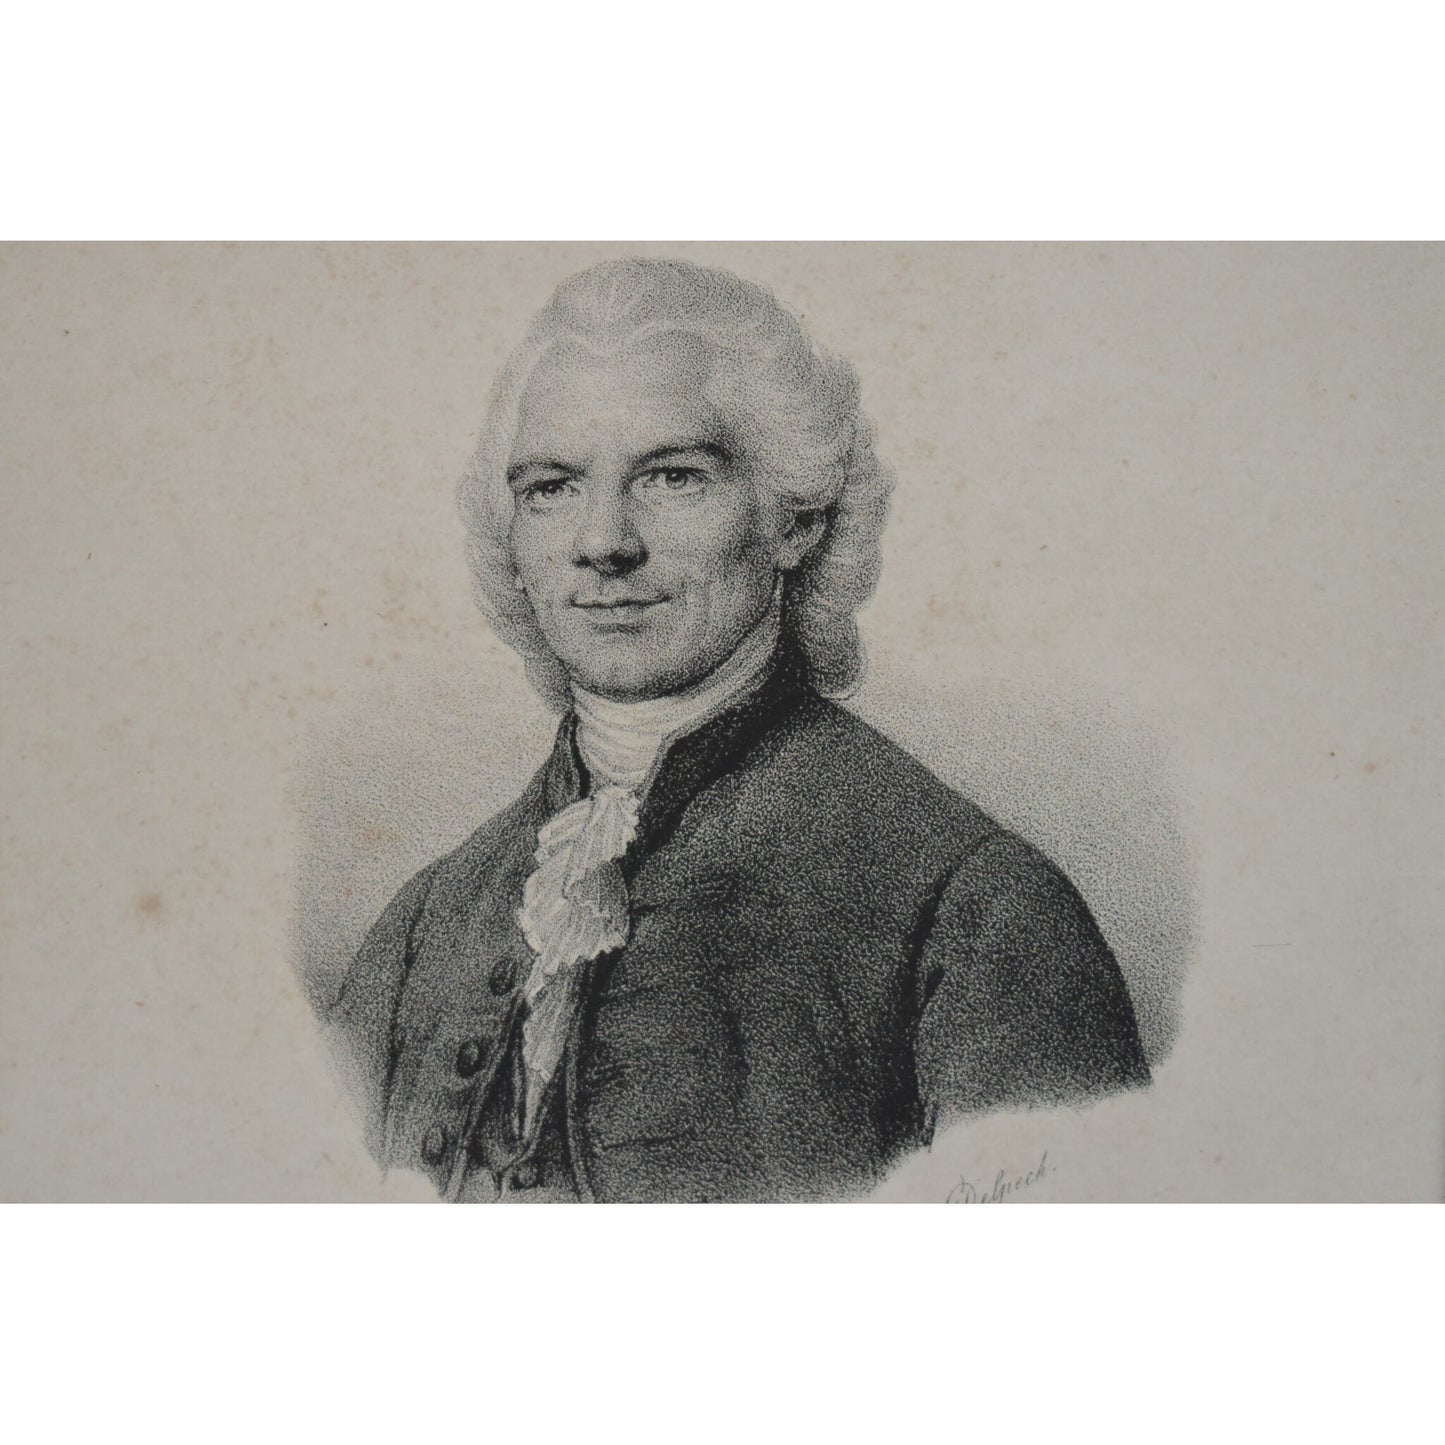 Antique print lithograph portrait of French poet Jacques Delille, by Francois Delpech, for sale at Winckelmann Gallery